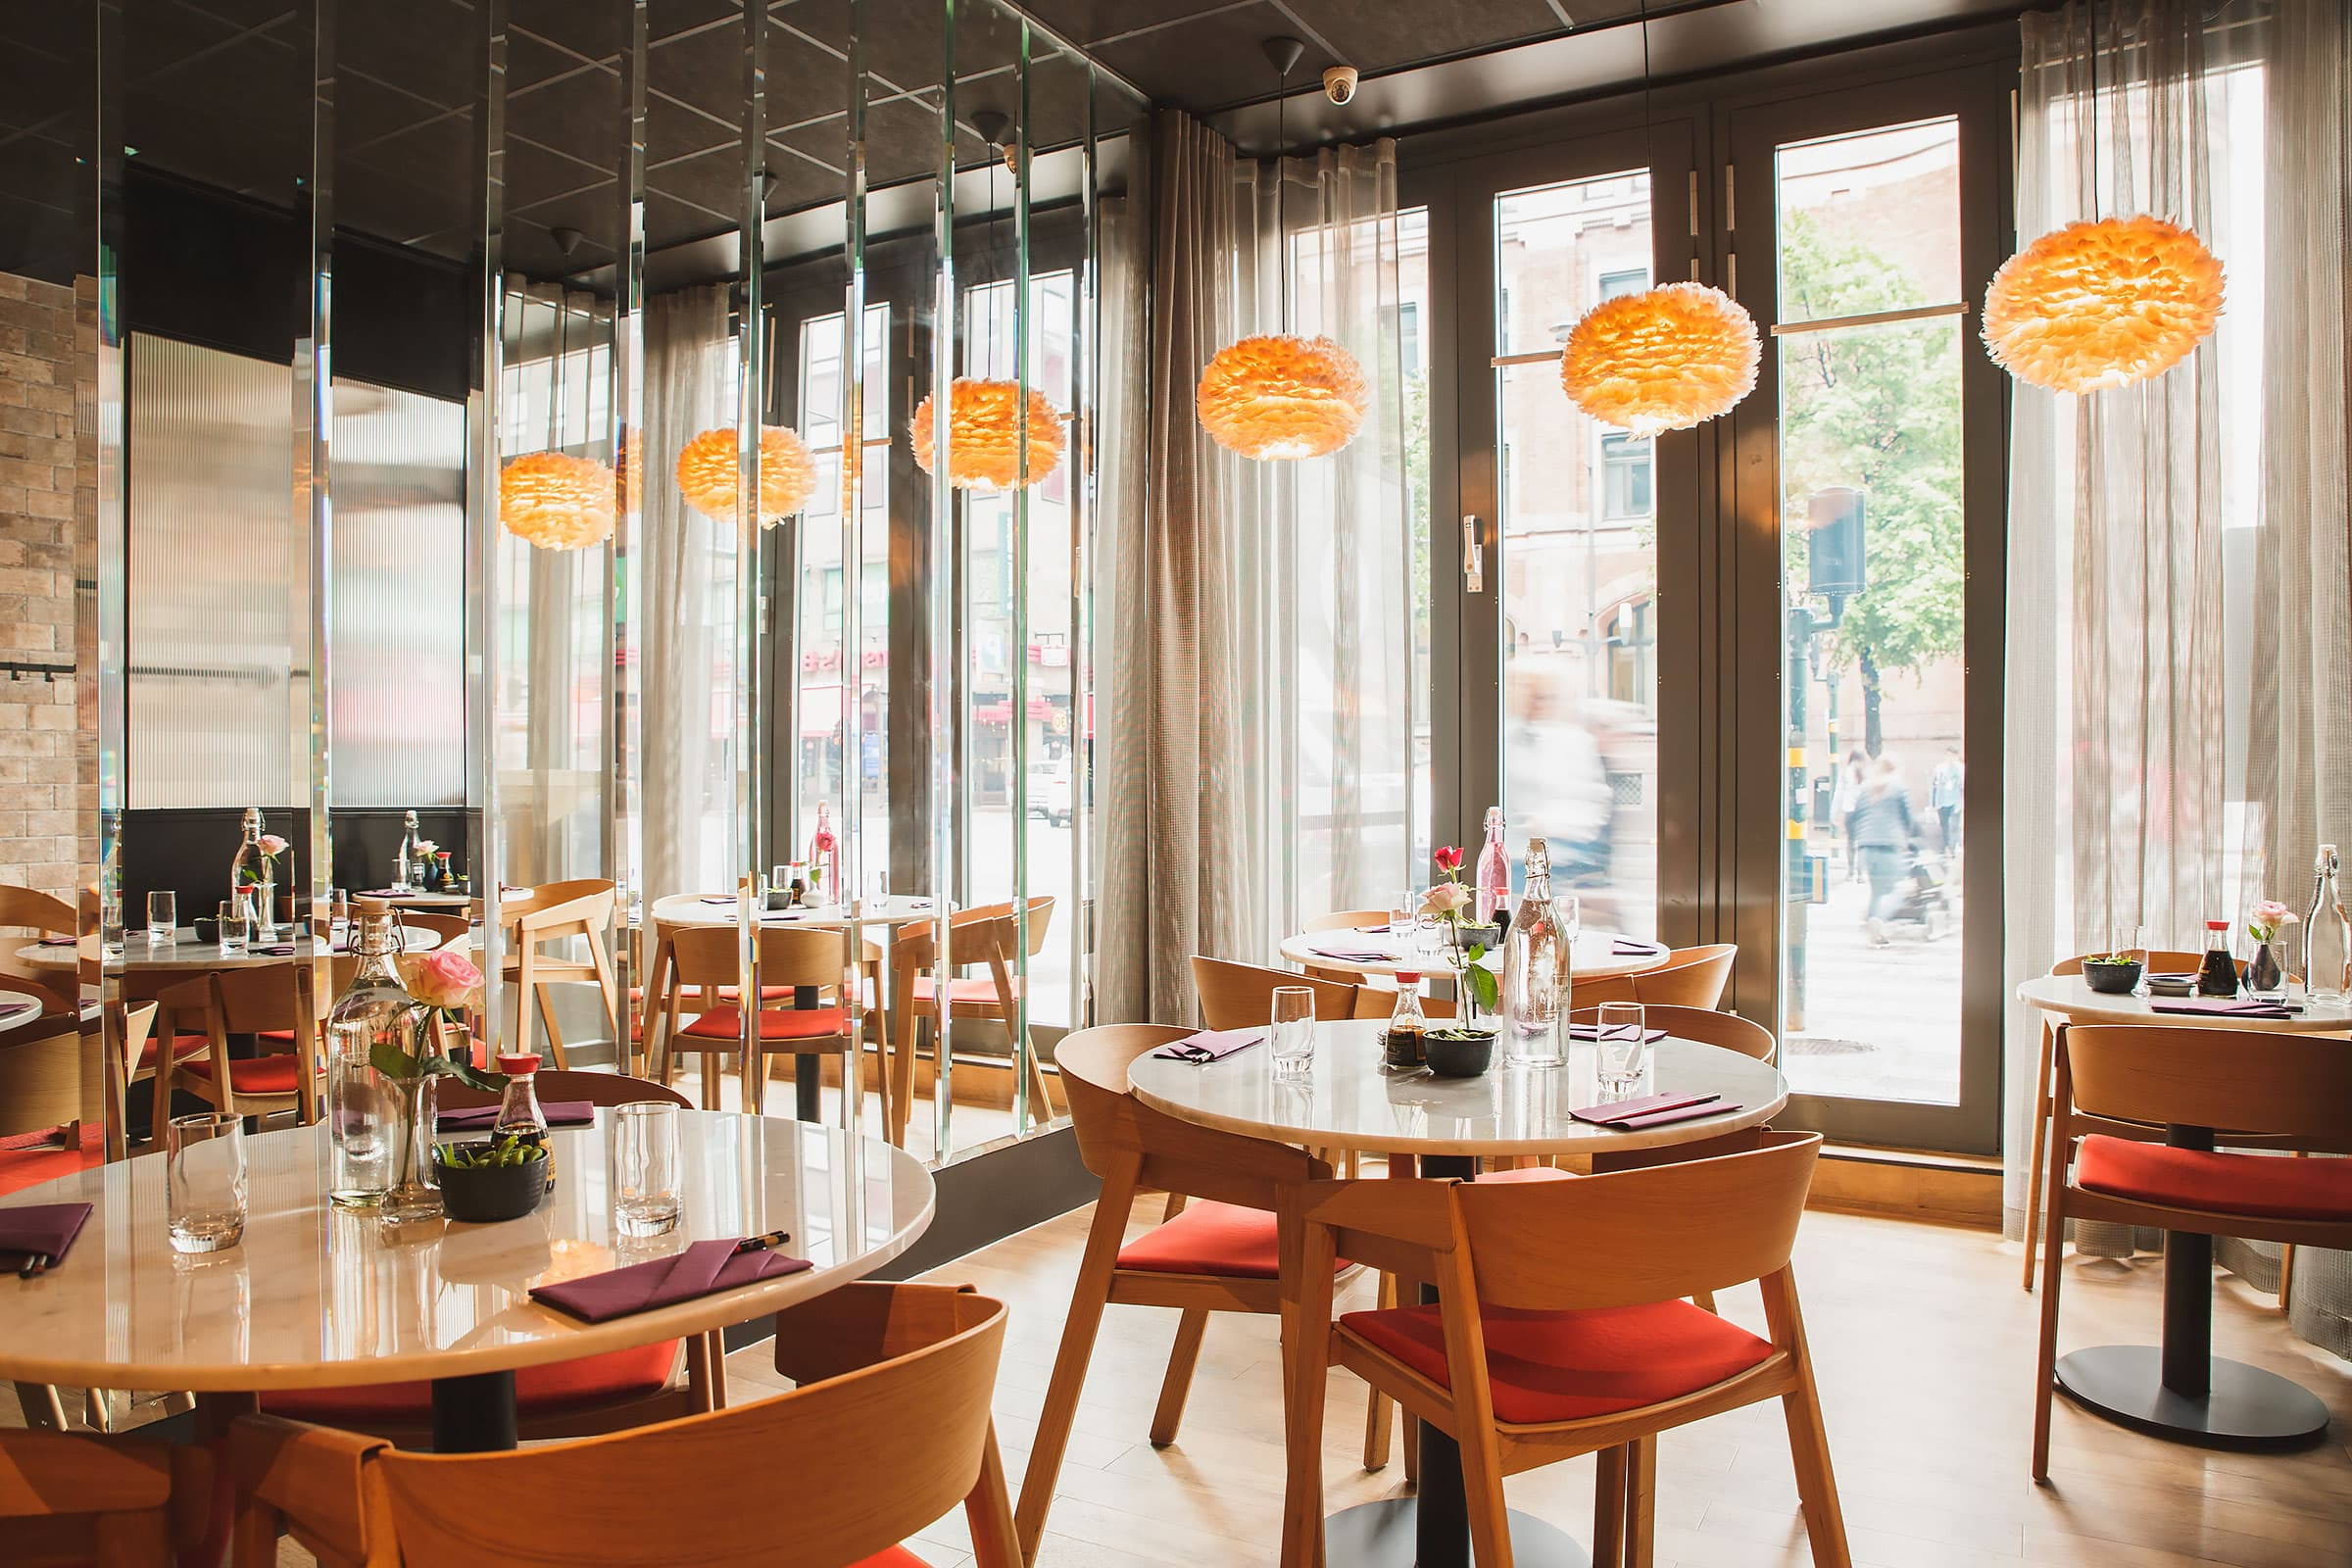 Guide to Vietnamese restaurants in London